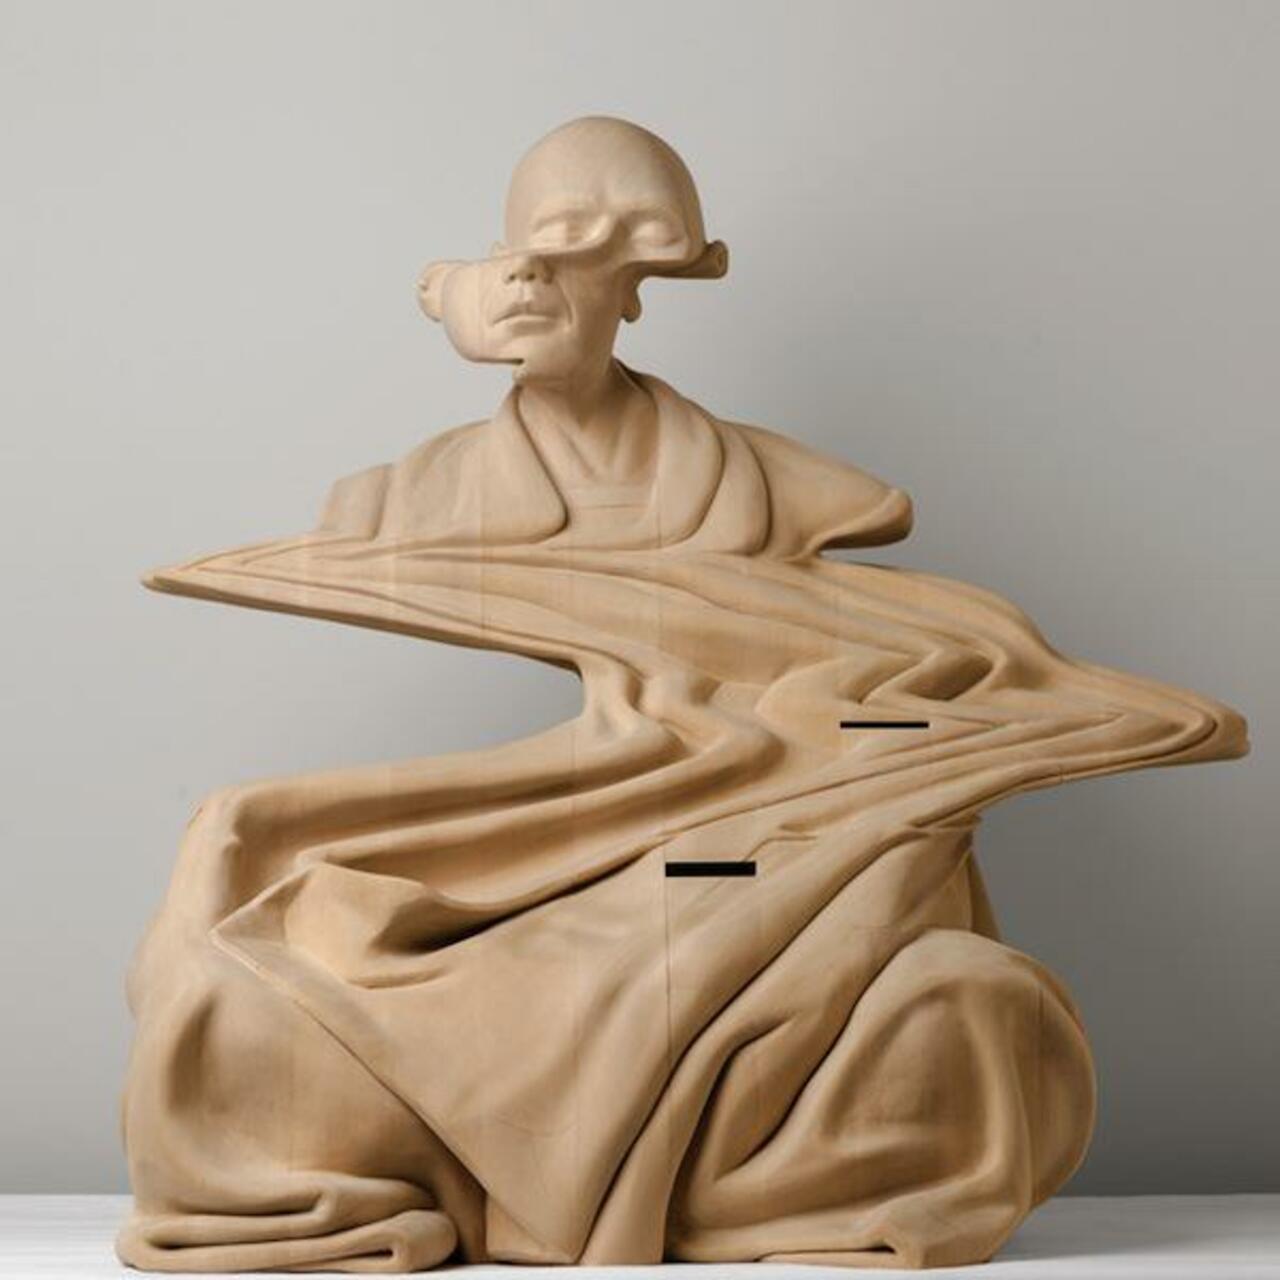 Unique Wooden Sculptures by Paul Kaptein - http://go.shr.lc/1tCIahN via @inspiration_hut #sculpture #art http://t.co/TrlAJxIami